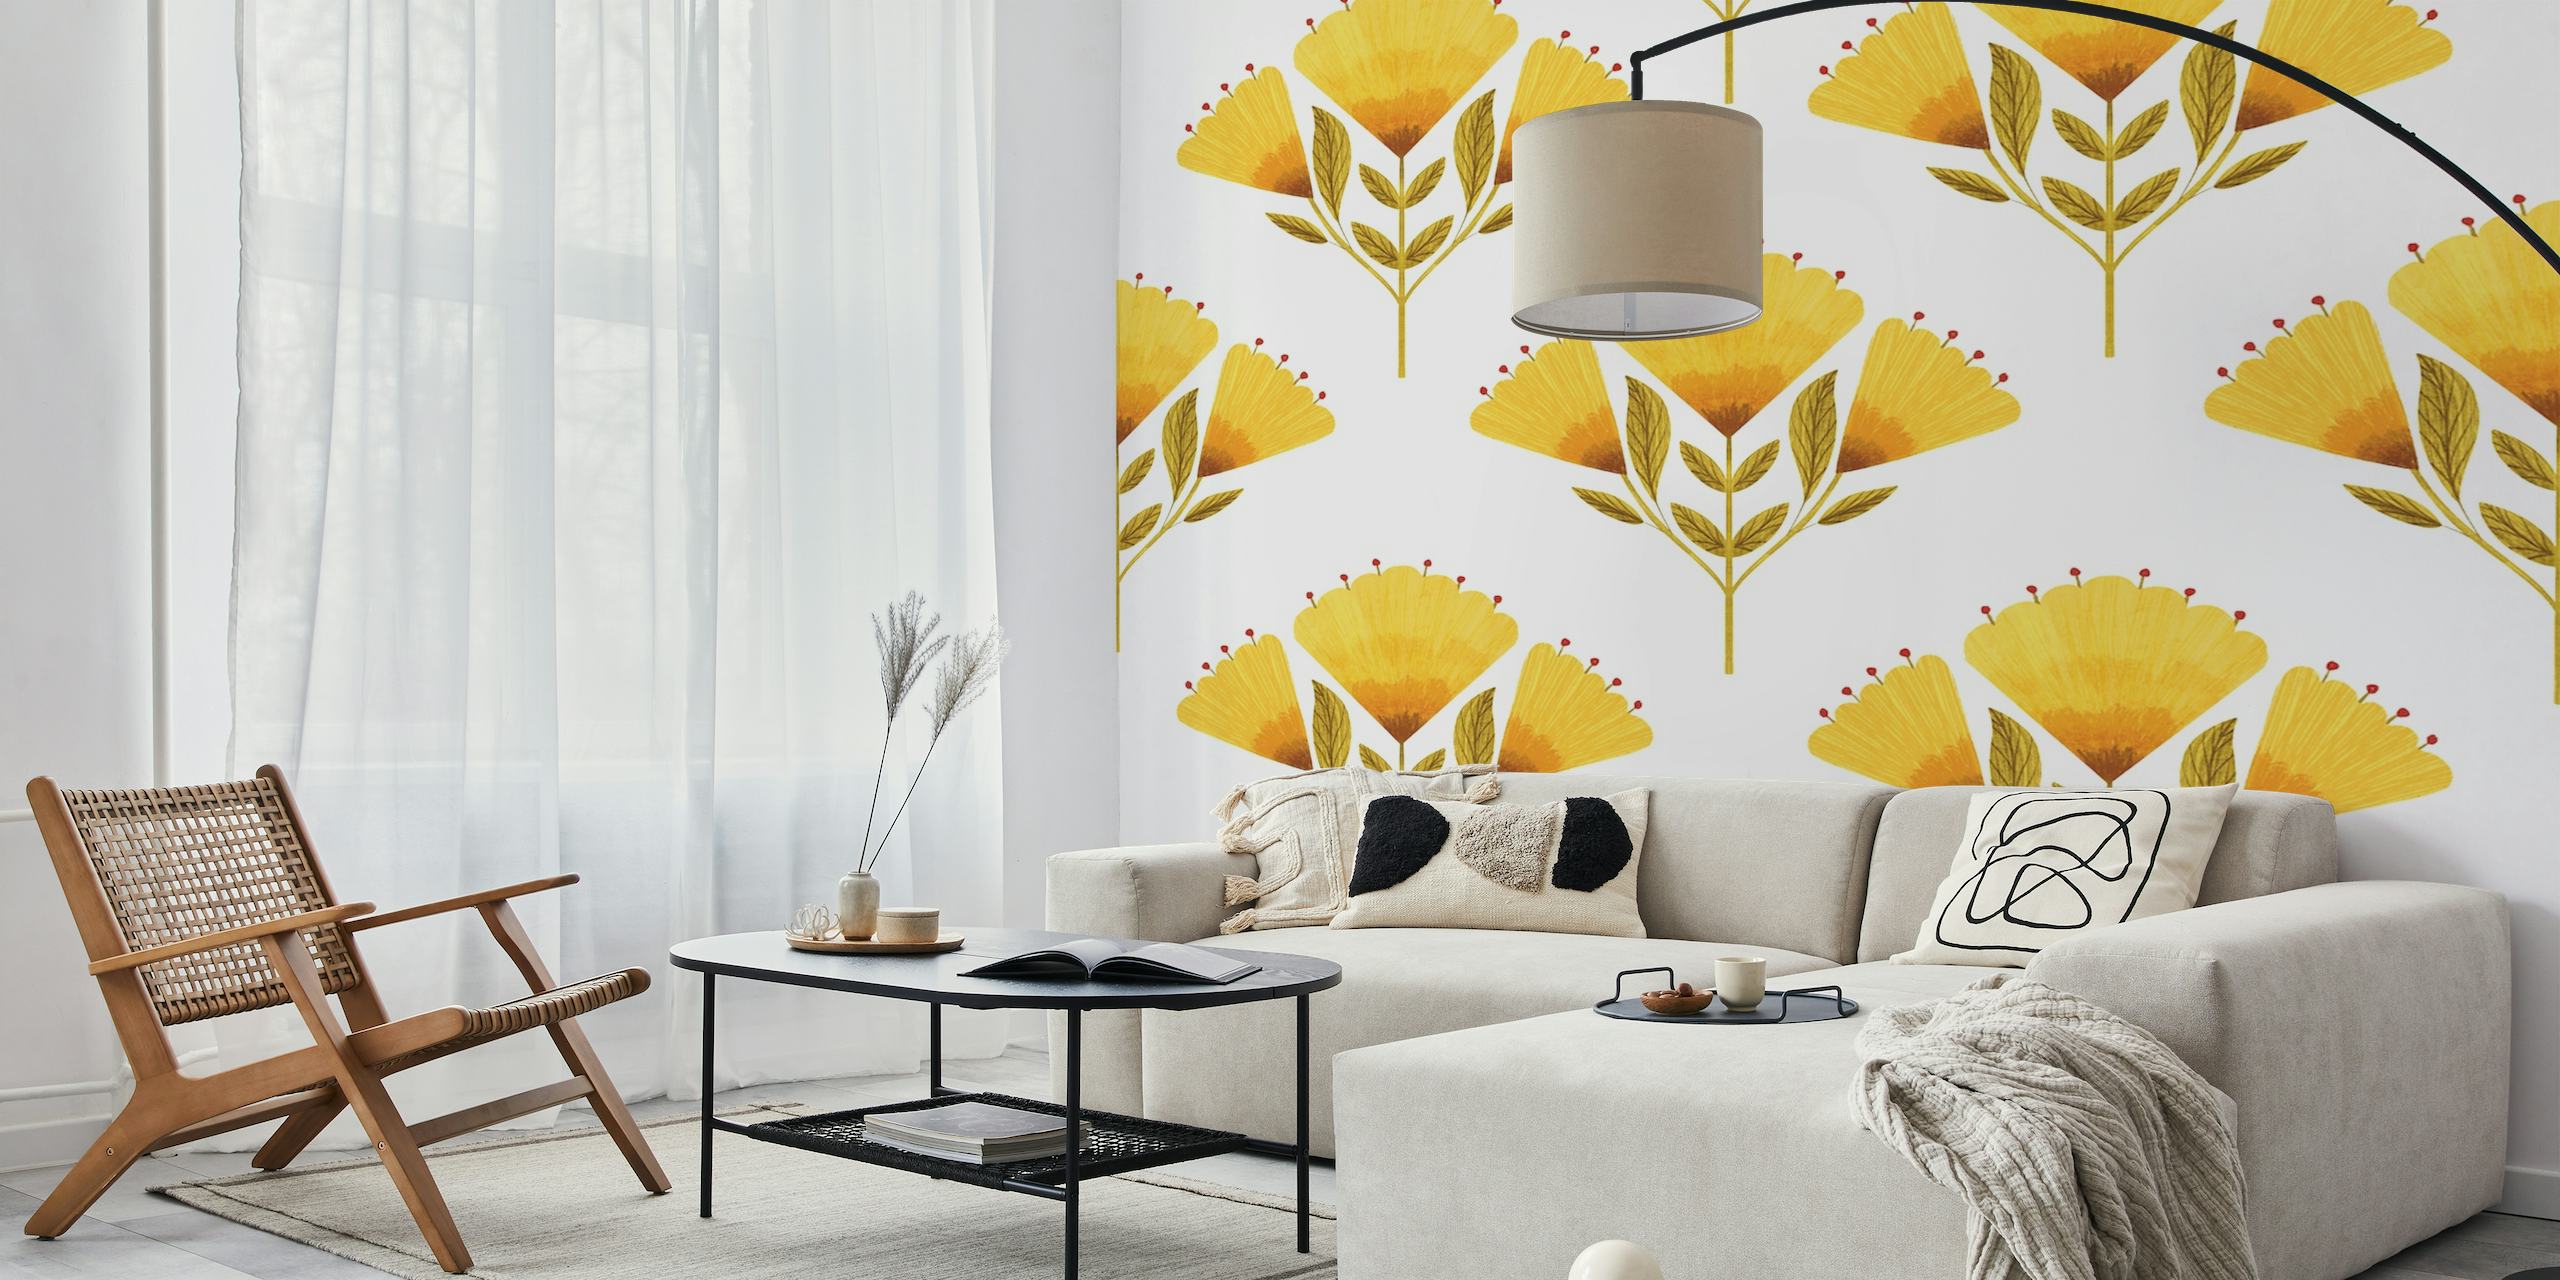 Whimsy Blooms: Vibrant Yellow Flower Delight wallpaper